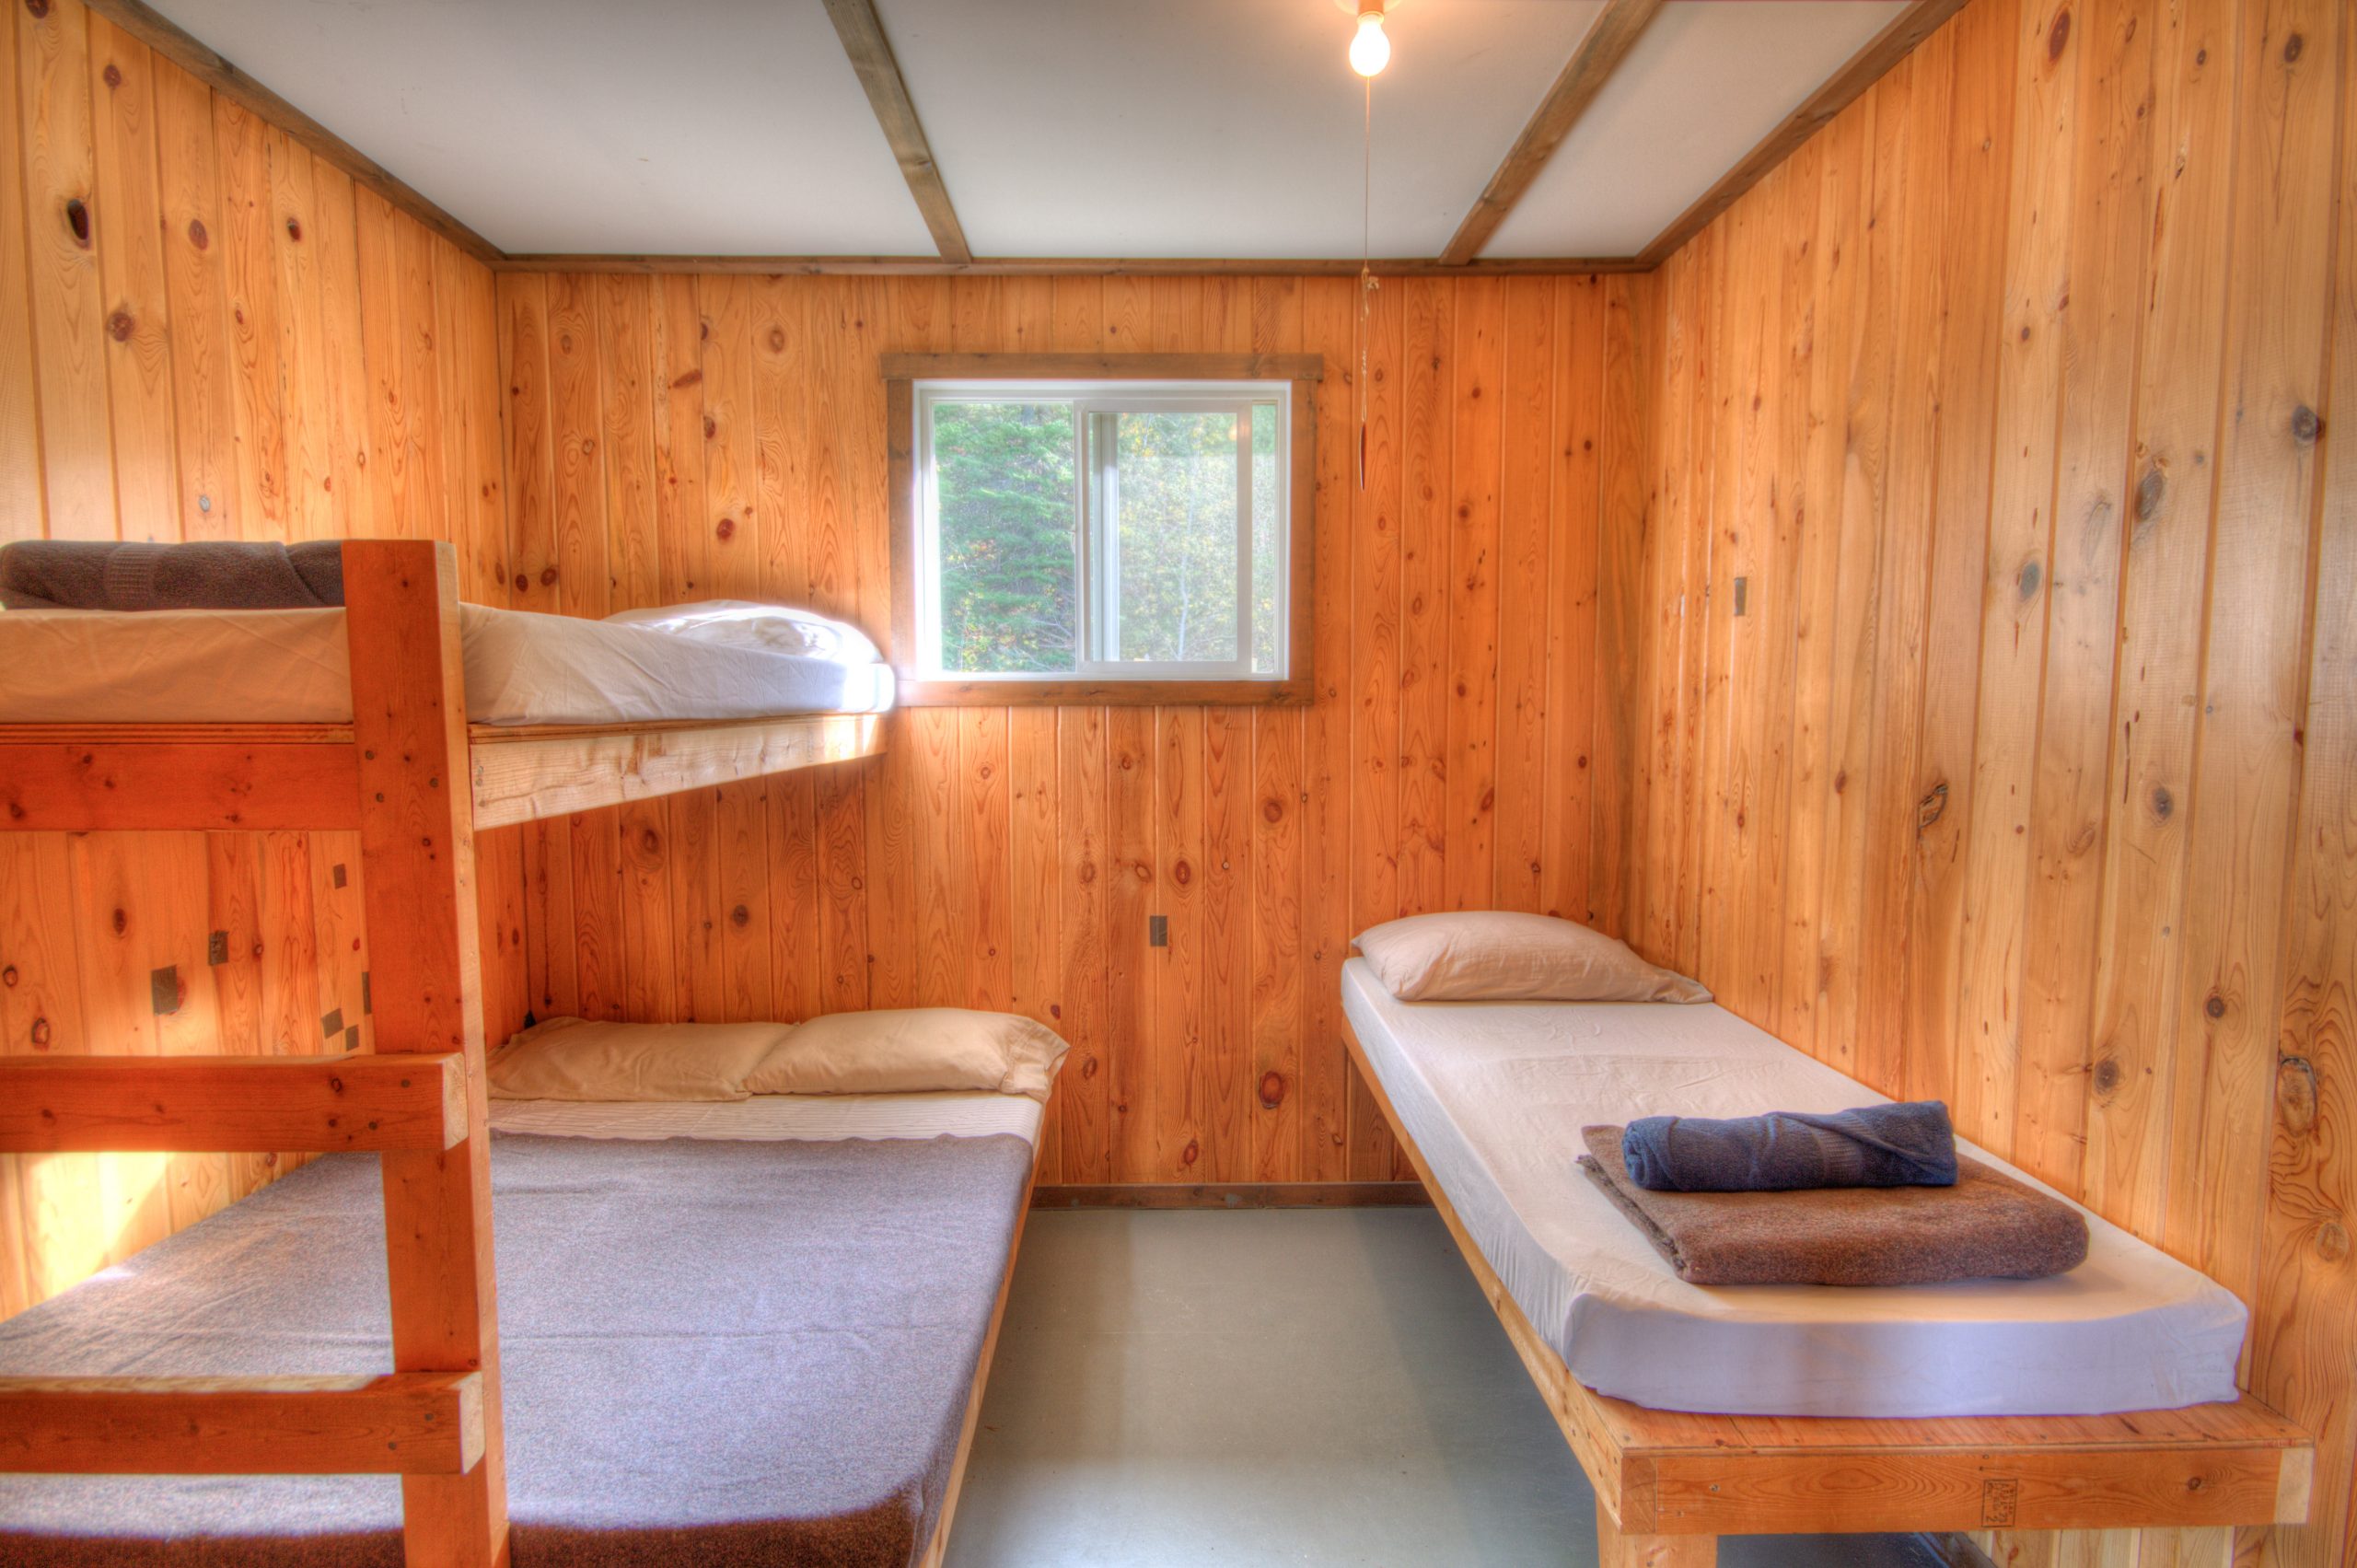 Bow Lake cabin bedroom.